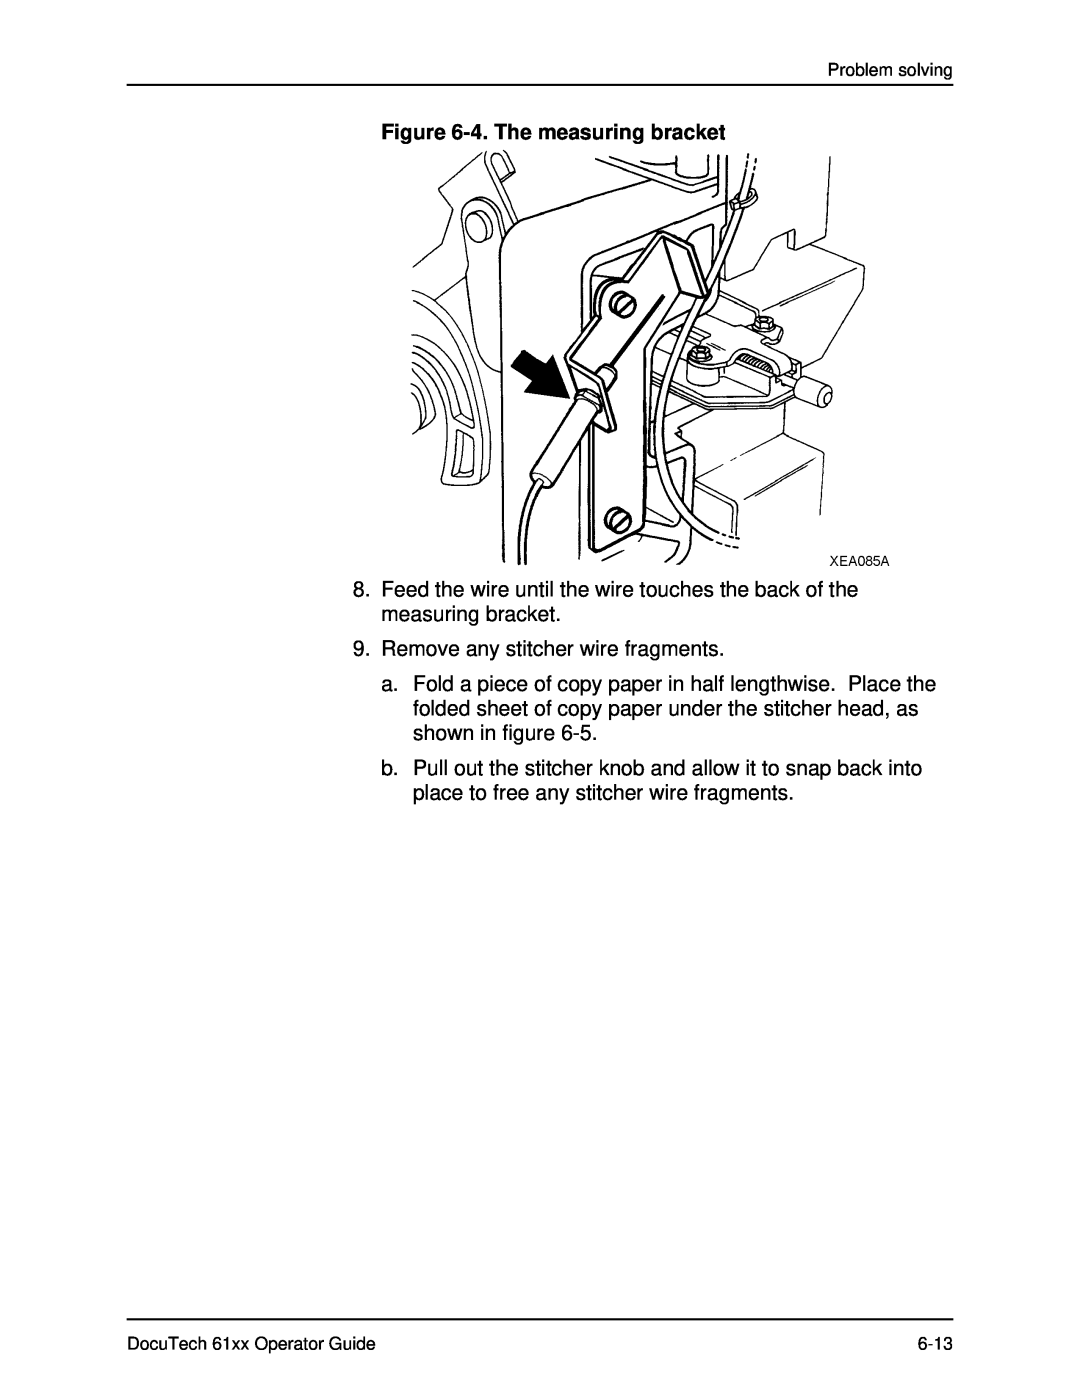 Xerox 61xx manual 4. The measuring bracket 